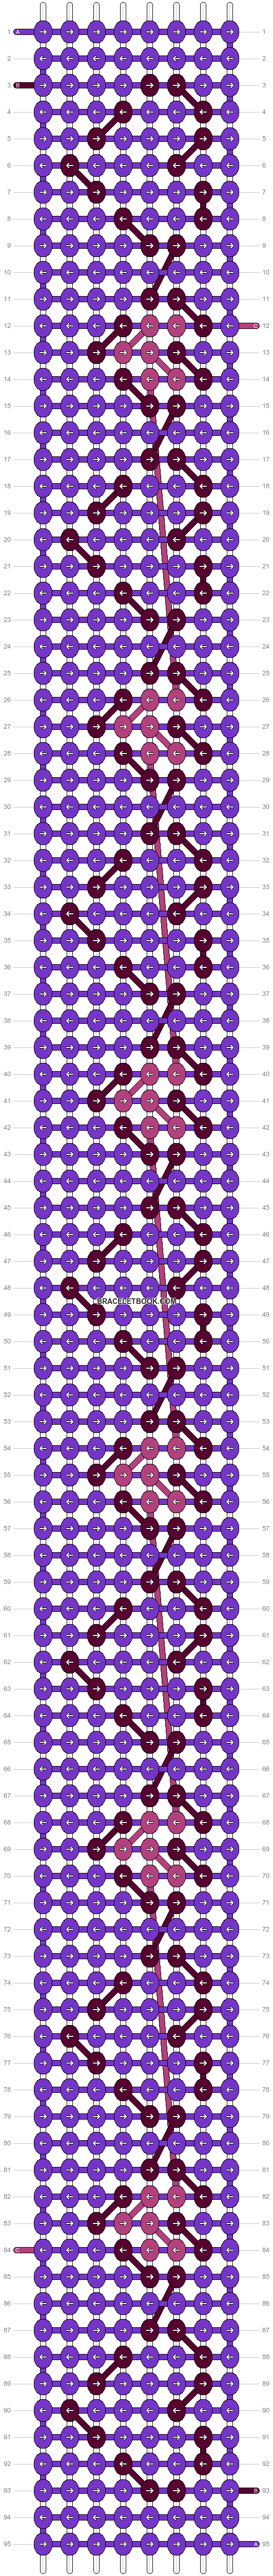 Alpha pattern #18028 variation #144080 pattern